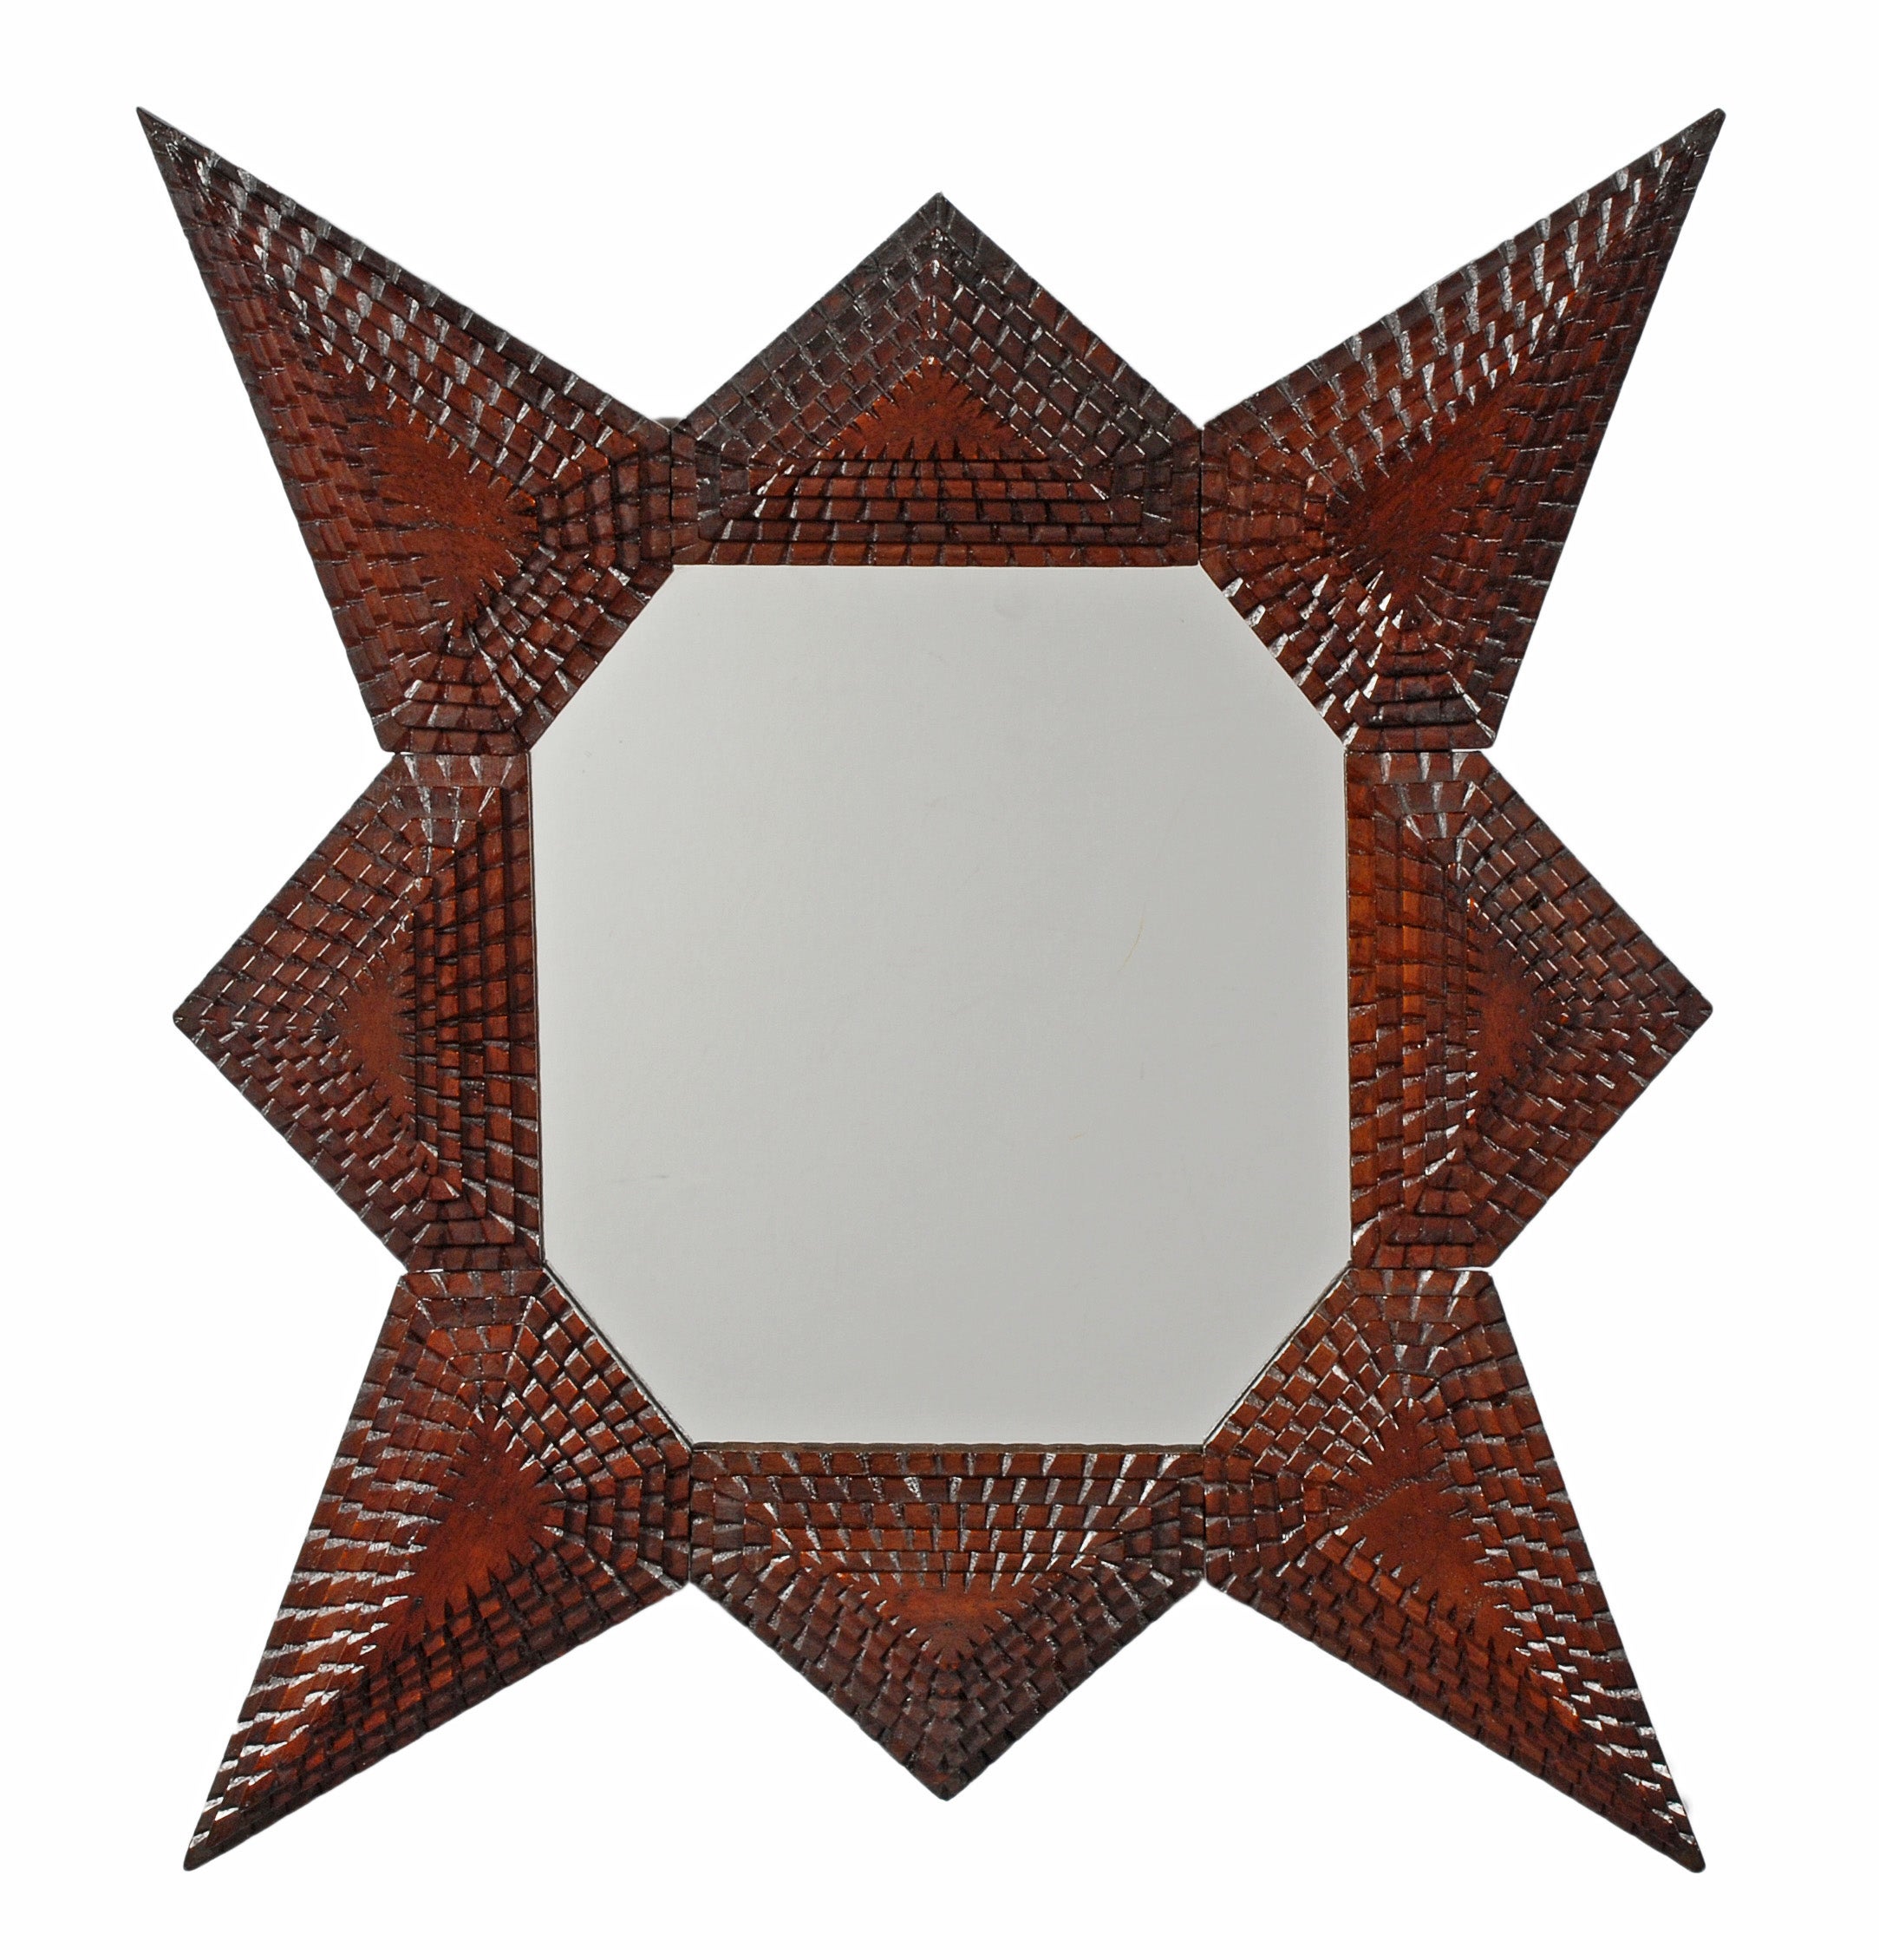 Tramp Art Star Shaped Mirror